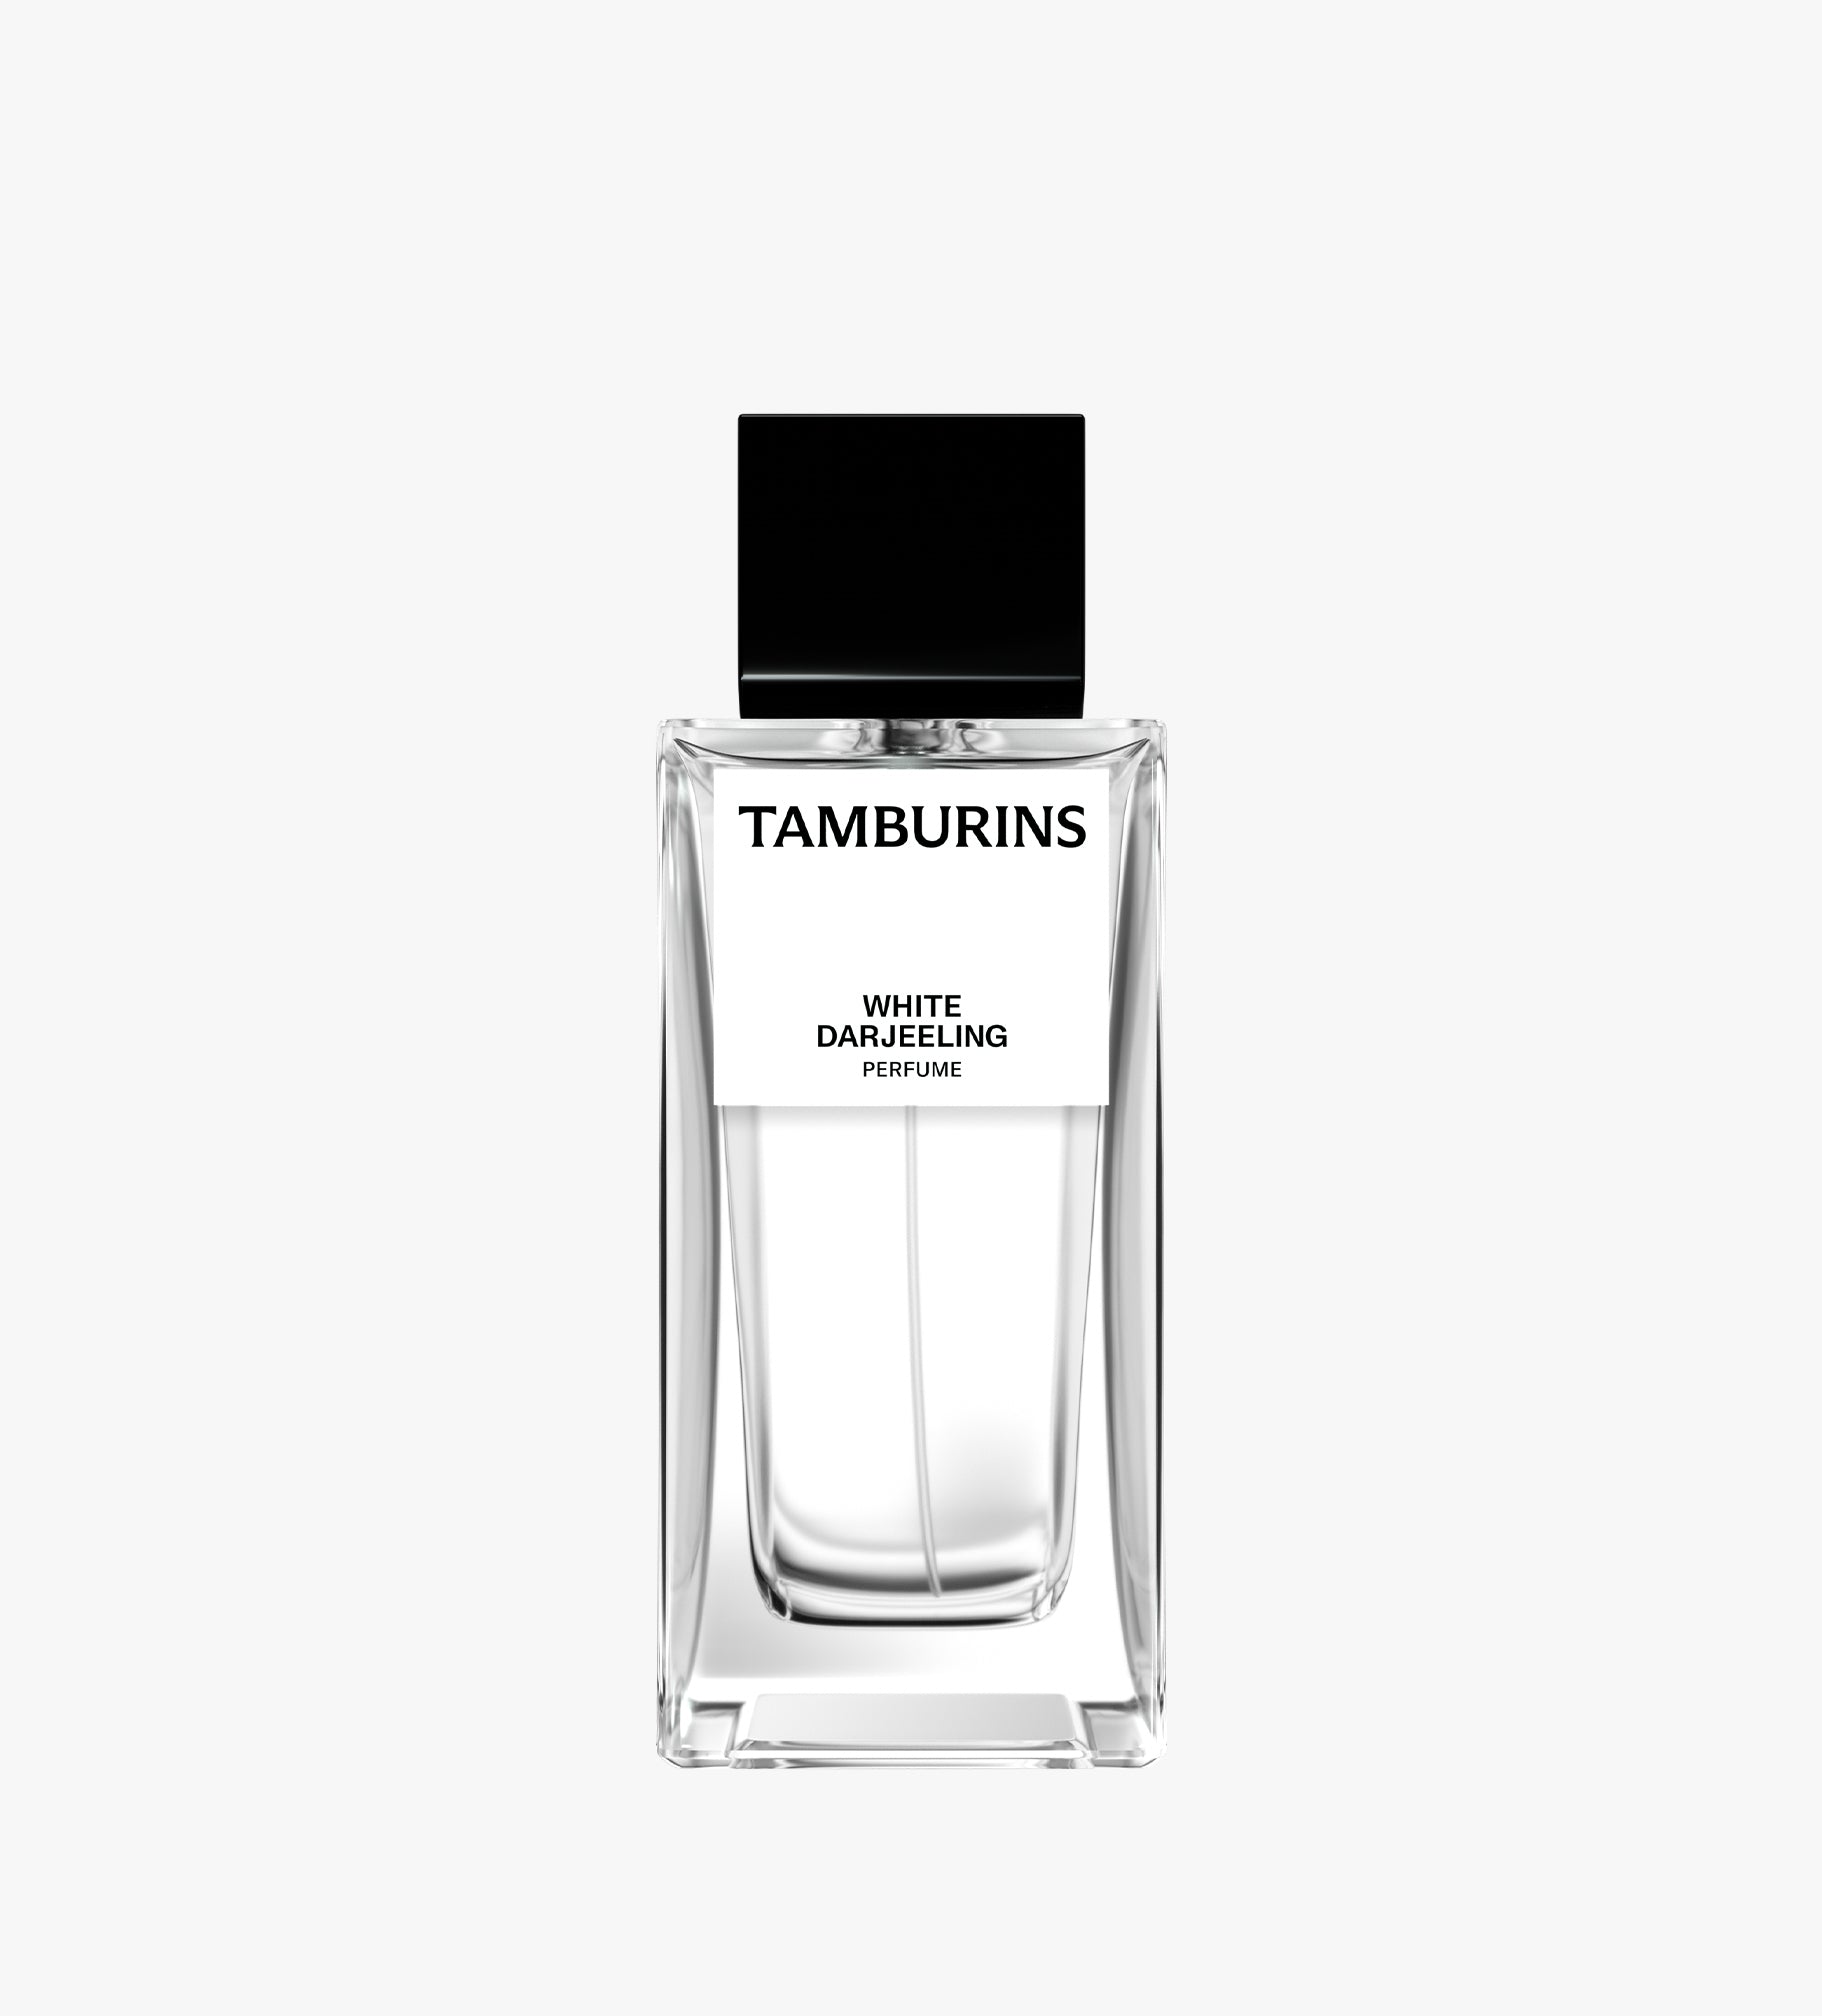 Tamburins Perfume - White Darjeeling